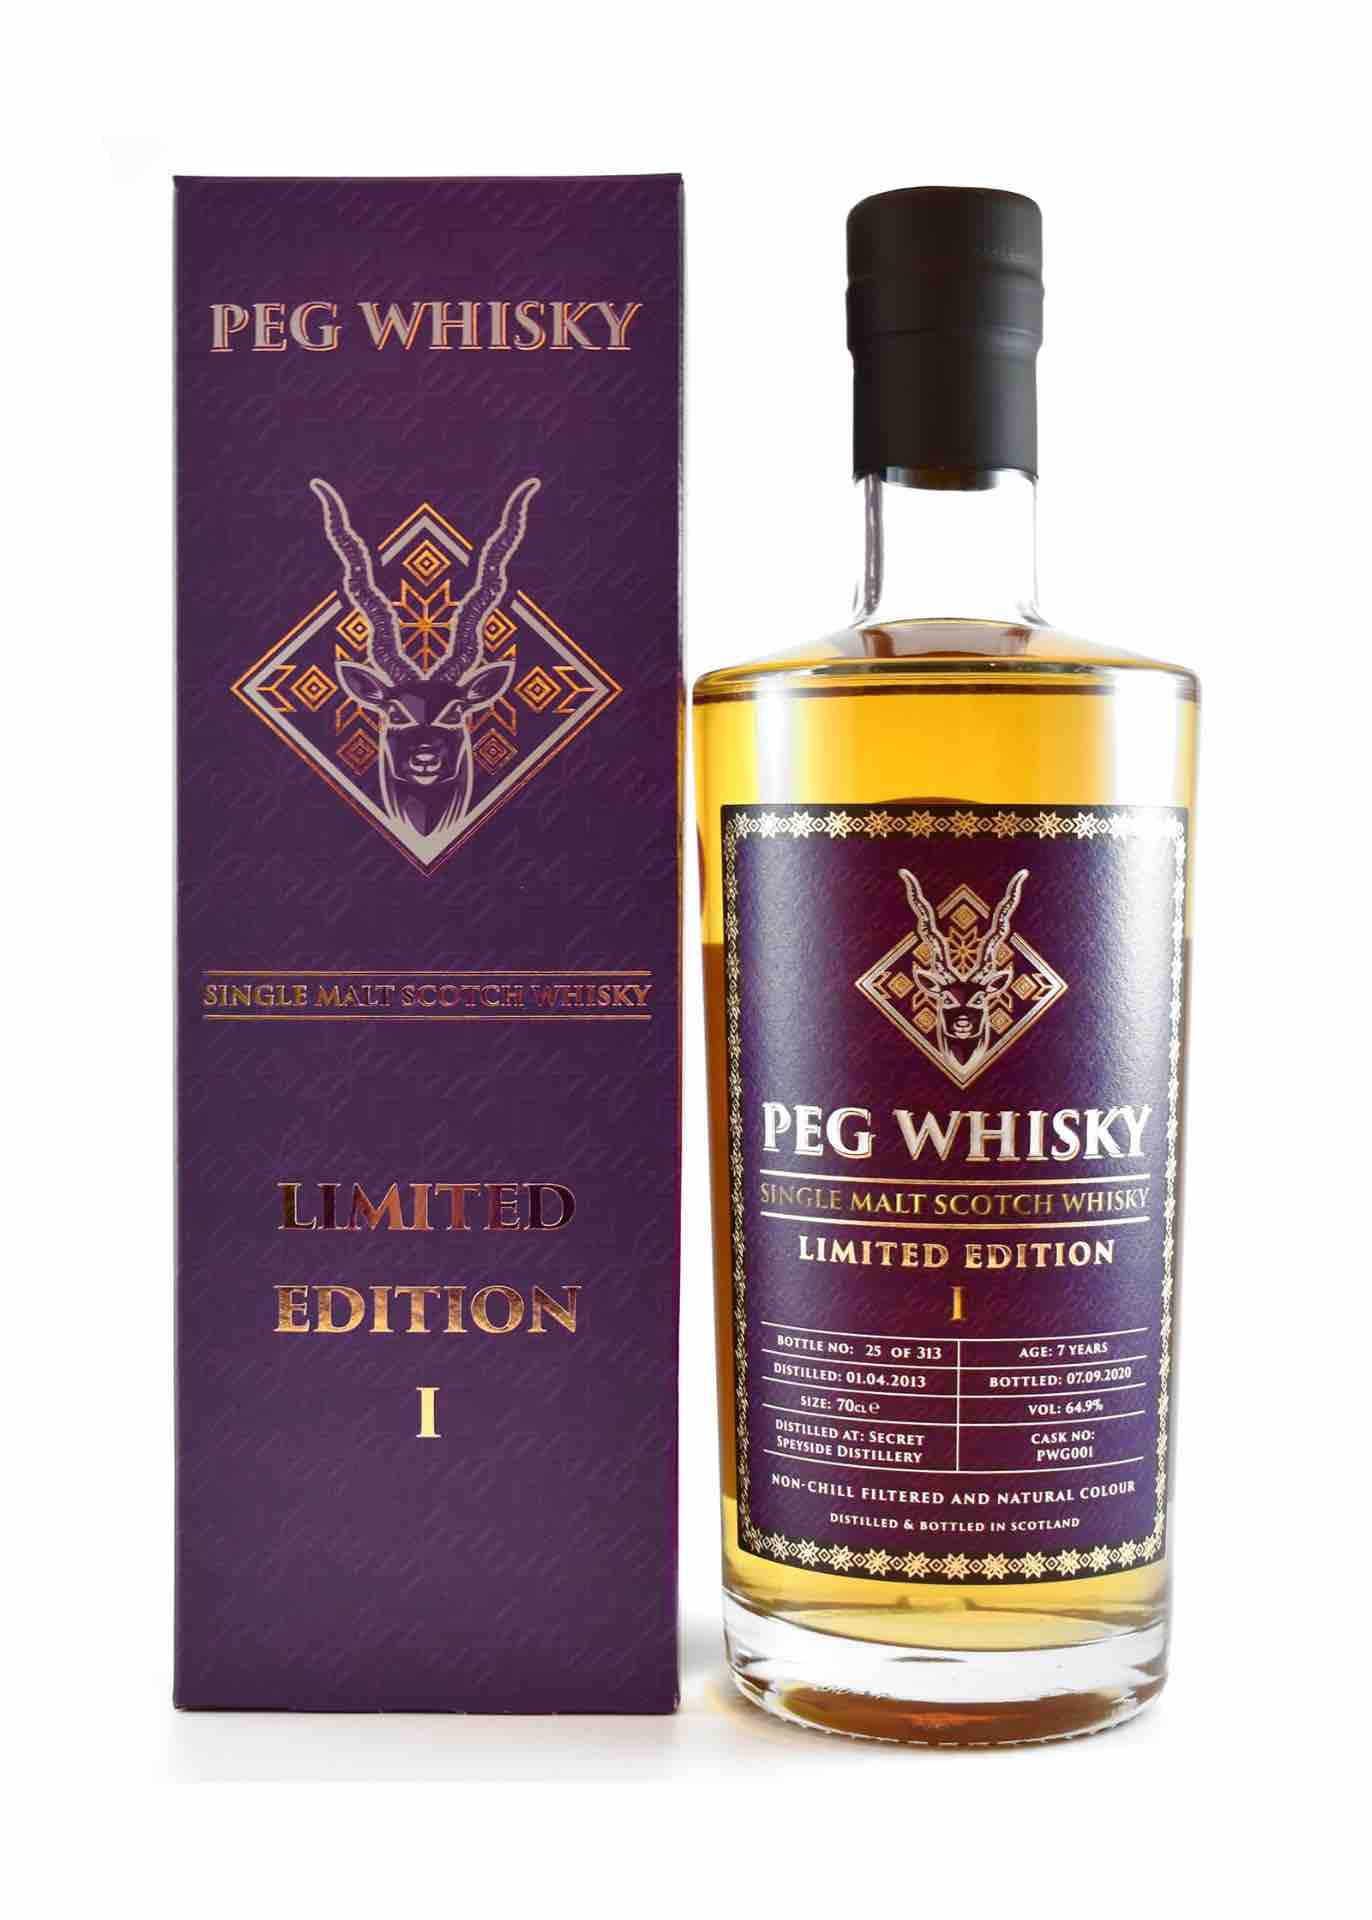 Peg Whisky Limited Edition I Secret Speyside 7 Year Old